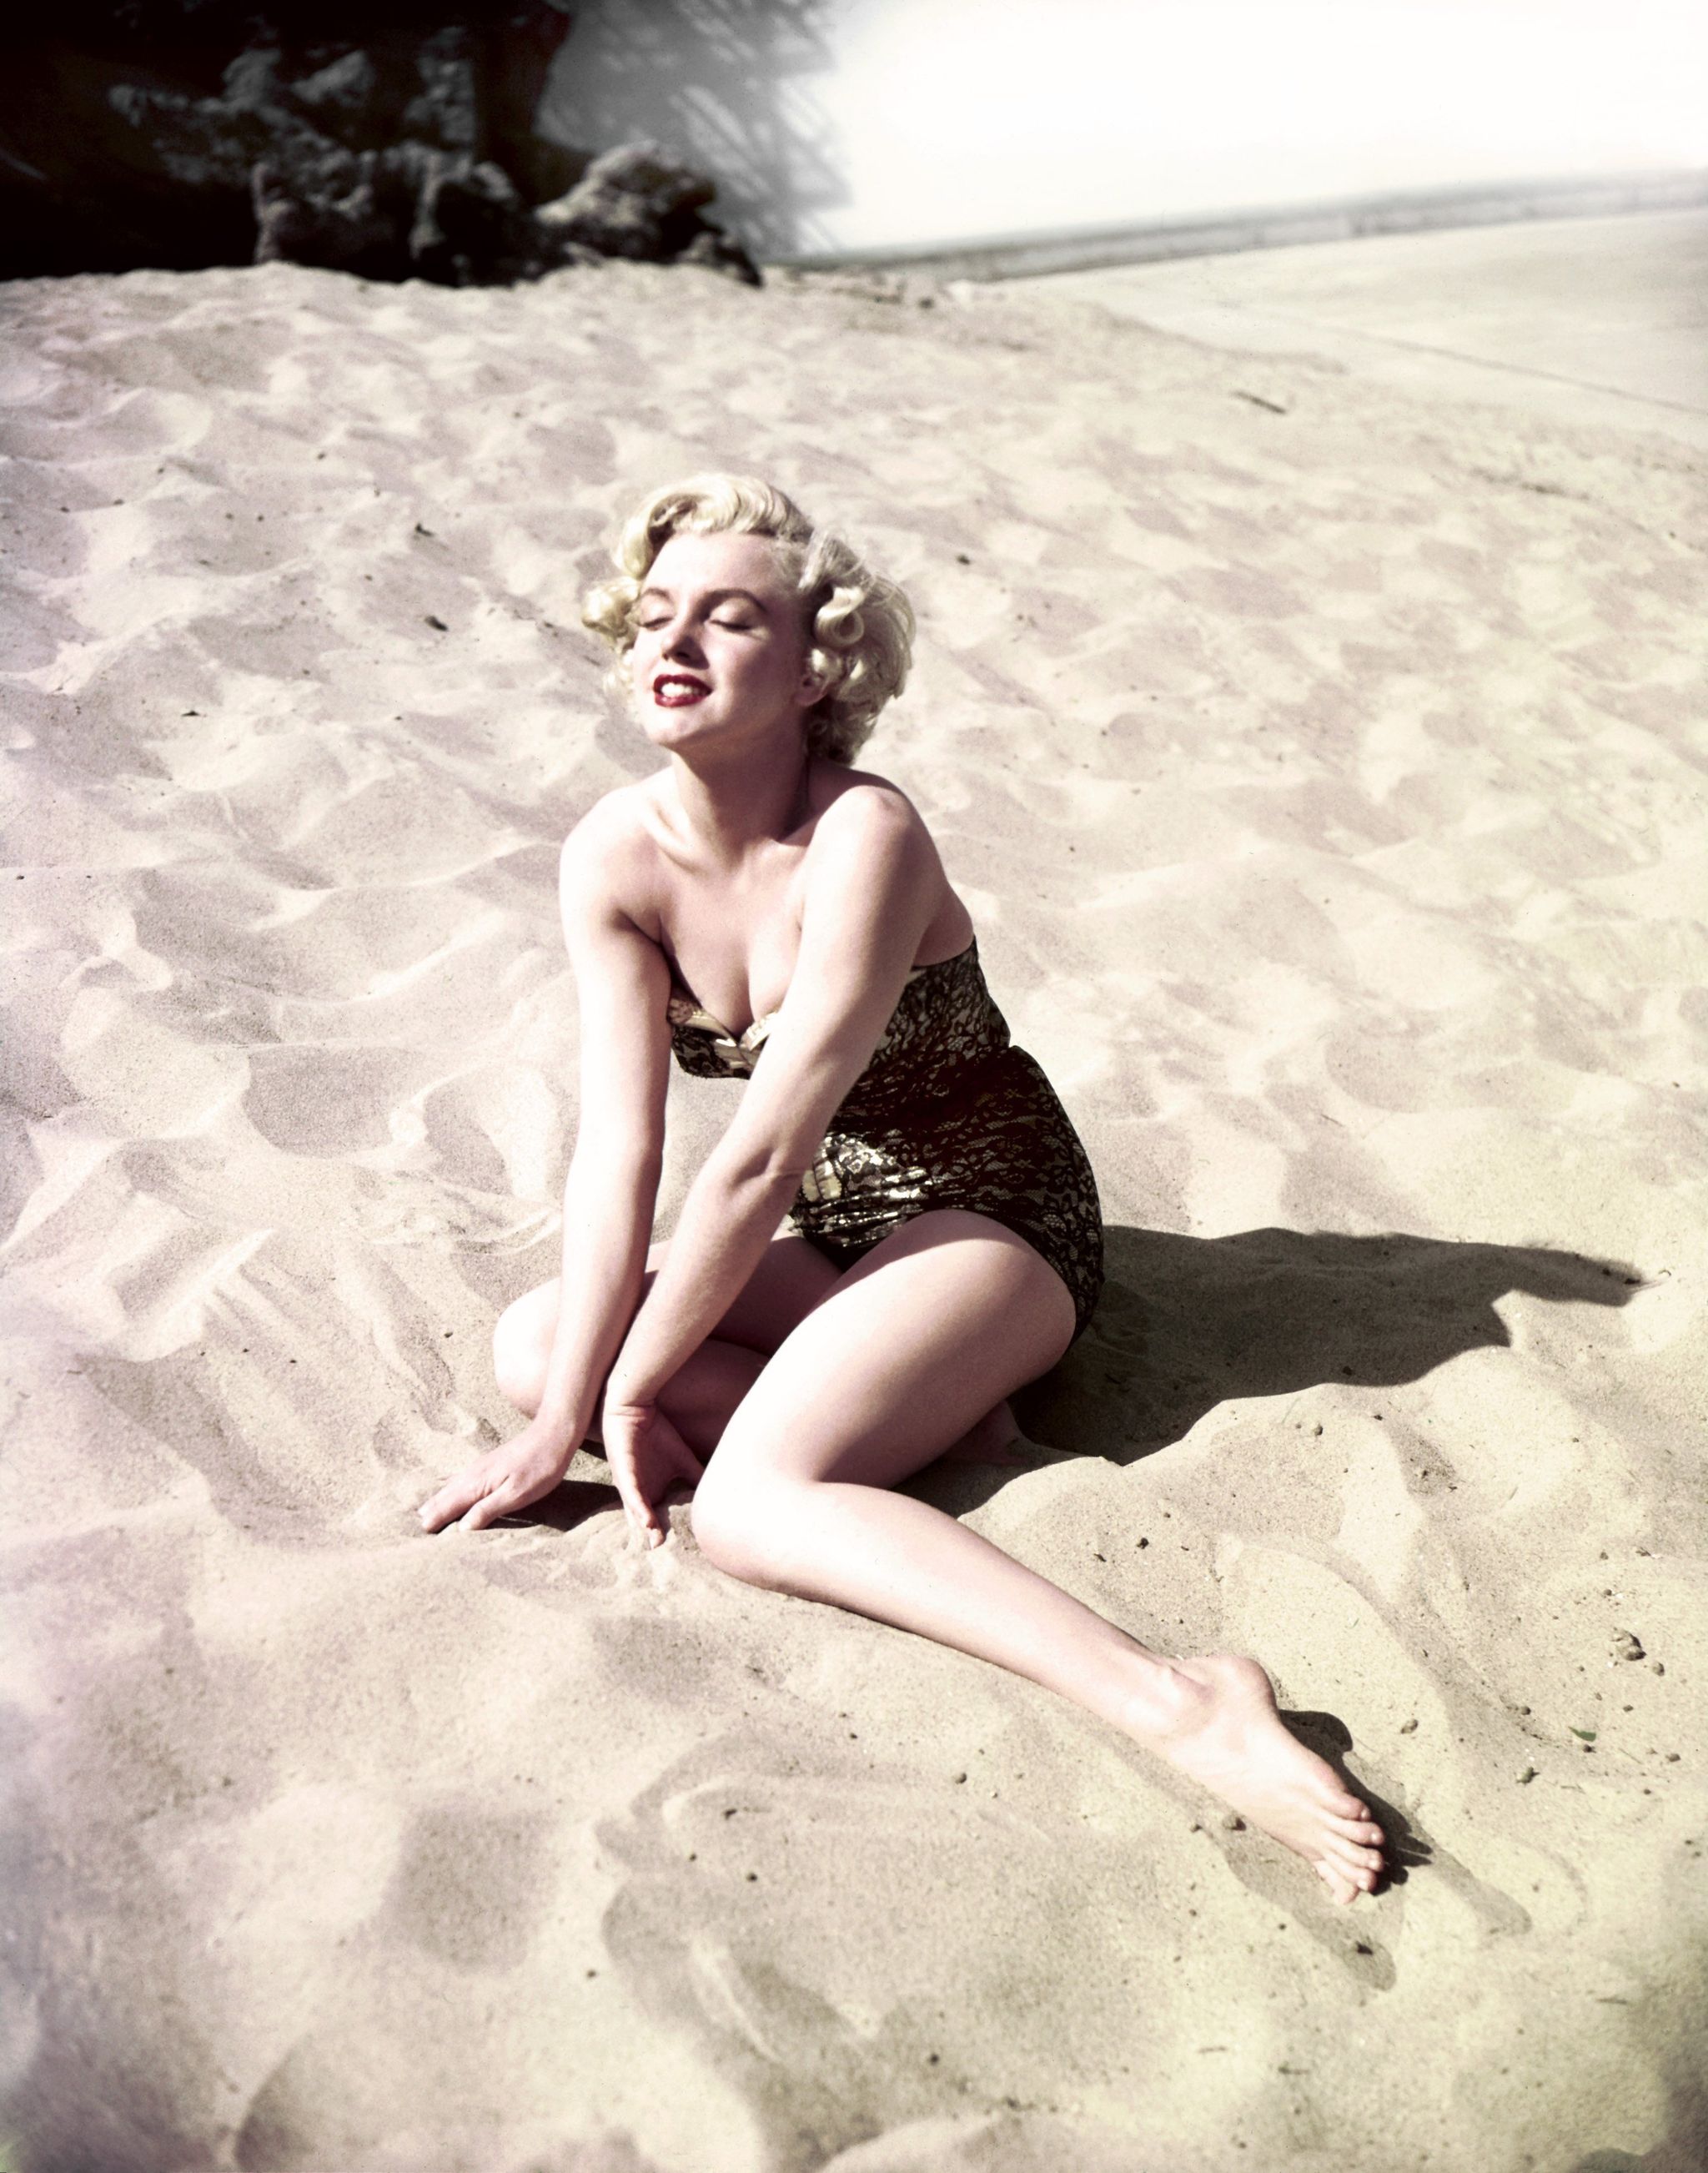 Marilyn Monroe Portrait Session